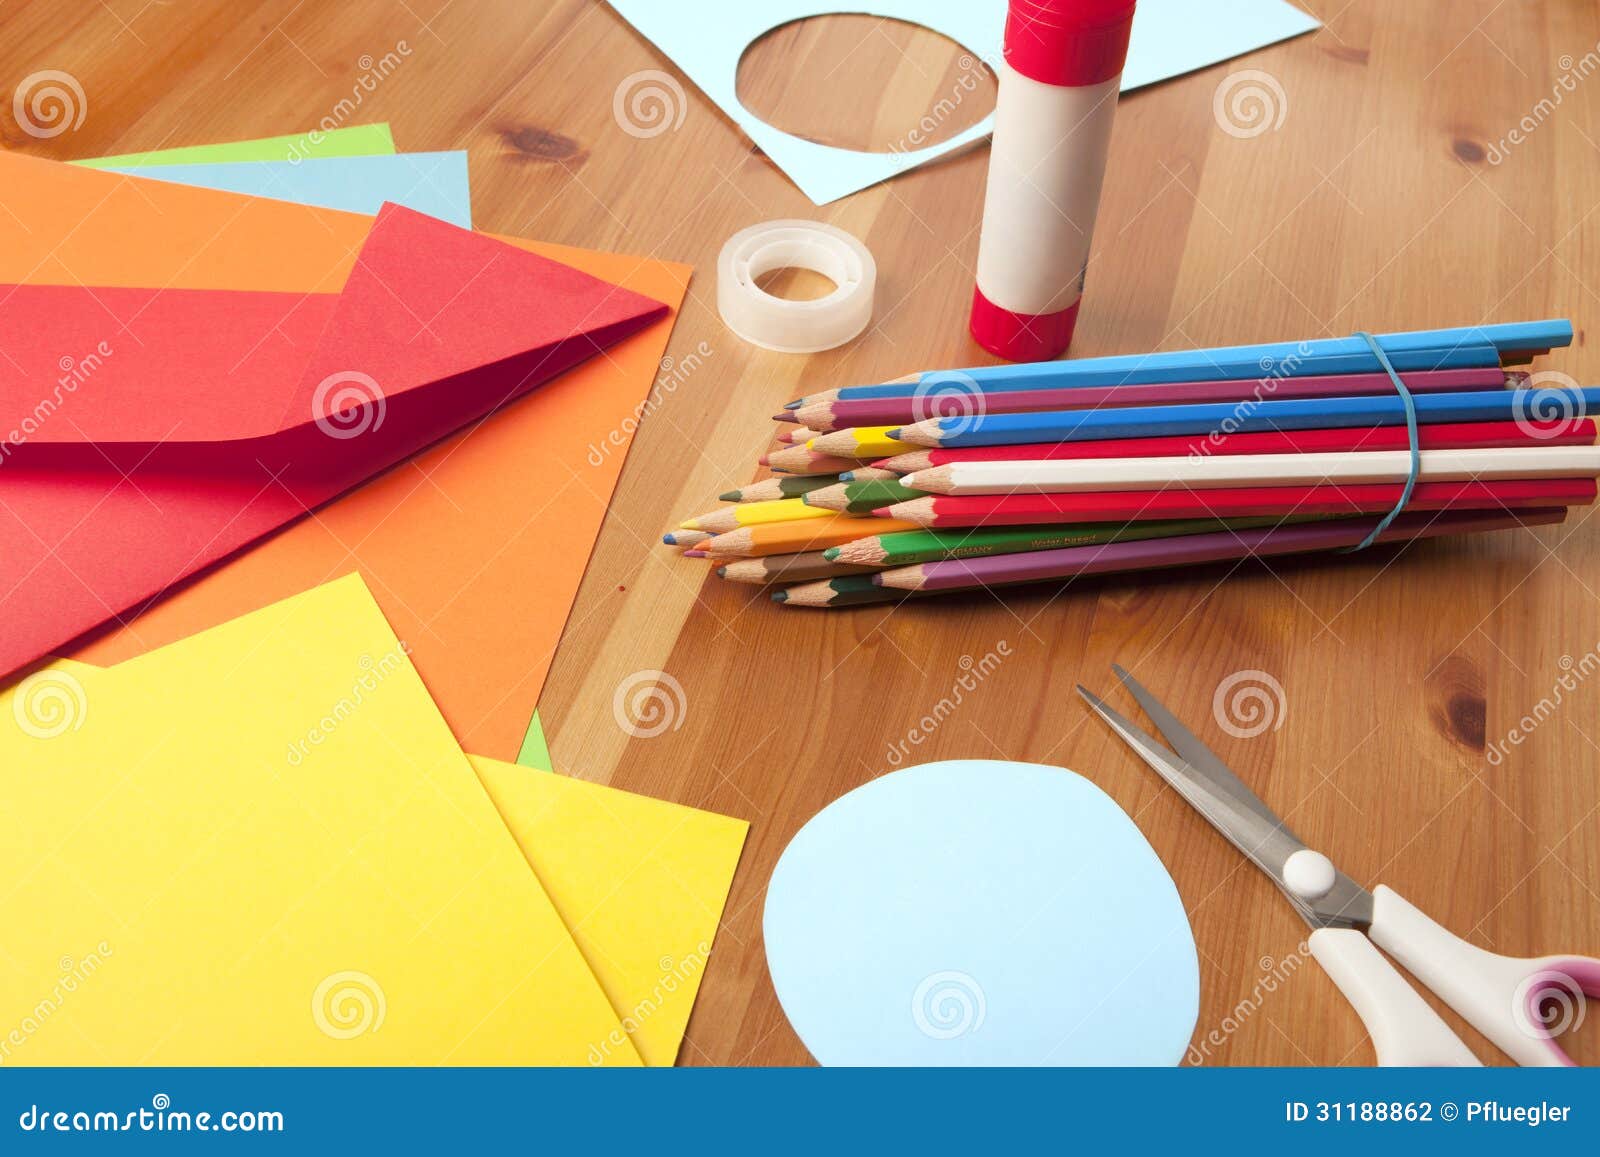 Color Paper Crafts Idea Art Stock Photo 252042610